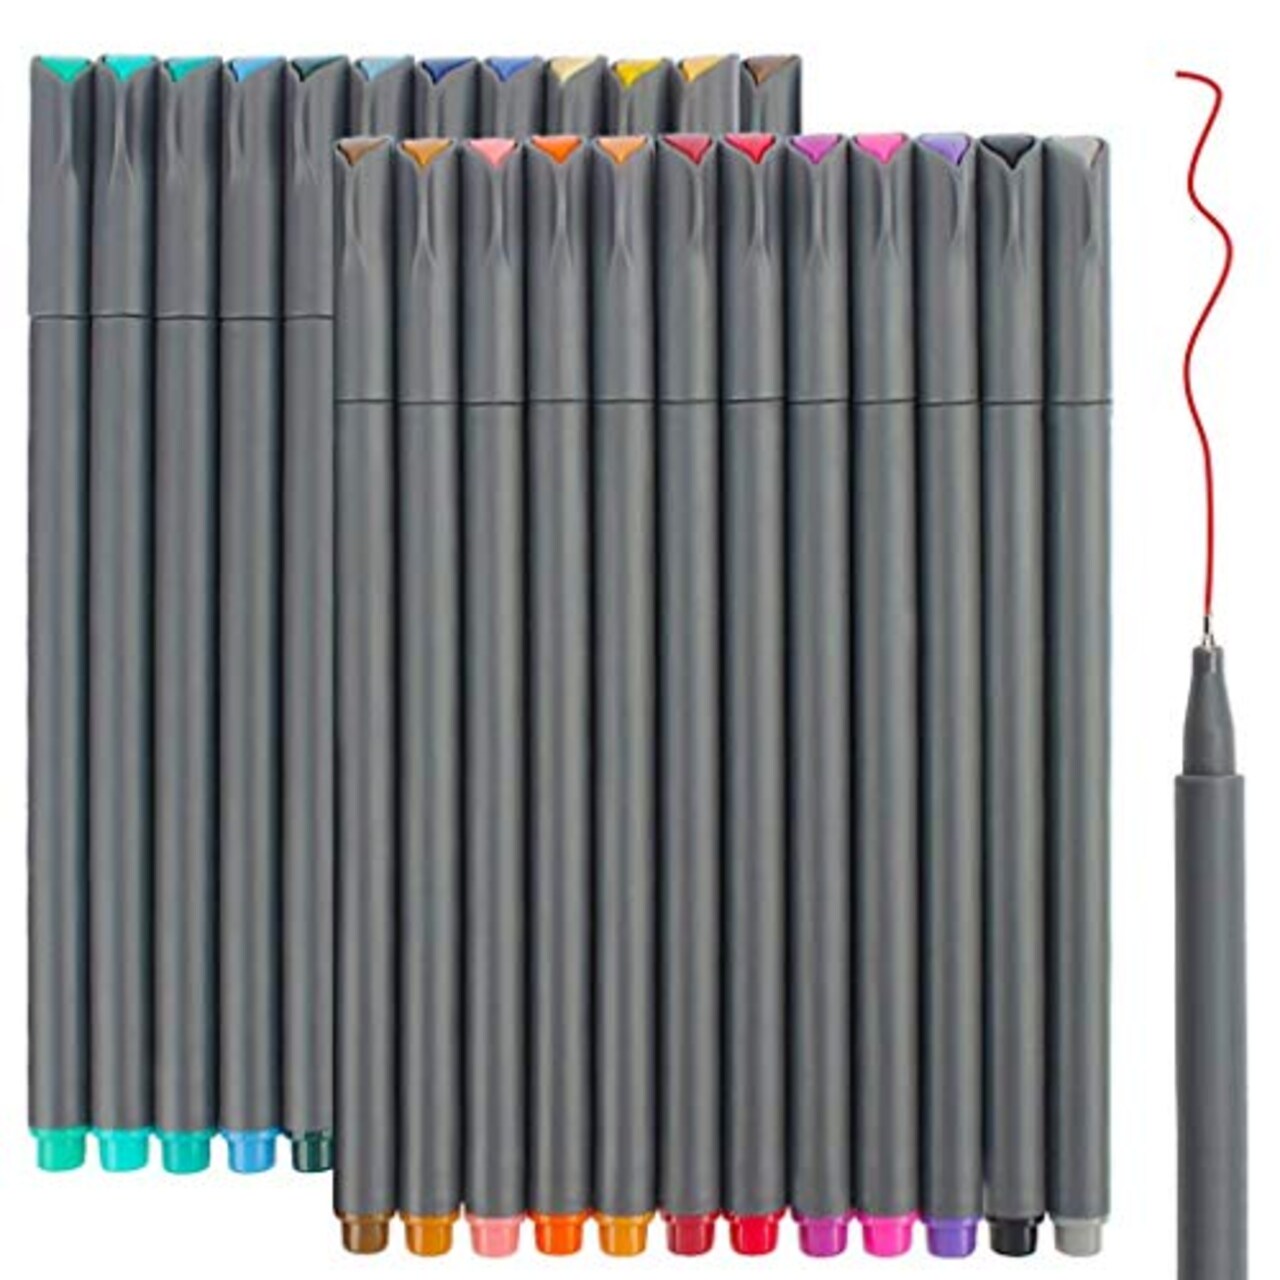 Taotree 24 Fineliner Color Pens, Fine Line Colored Sketch Writing